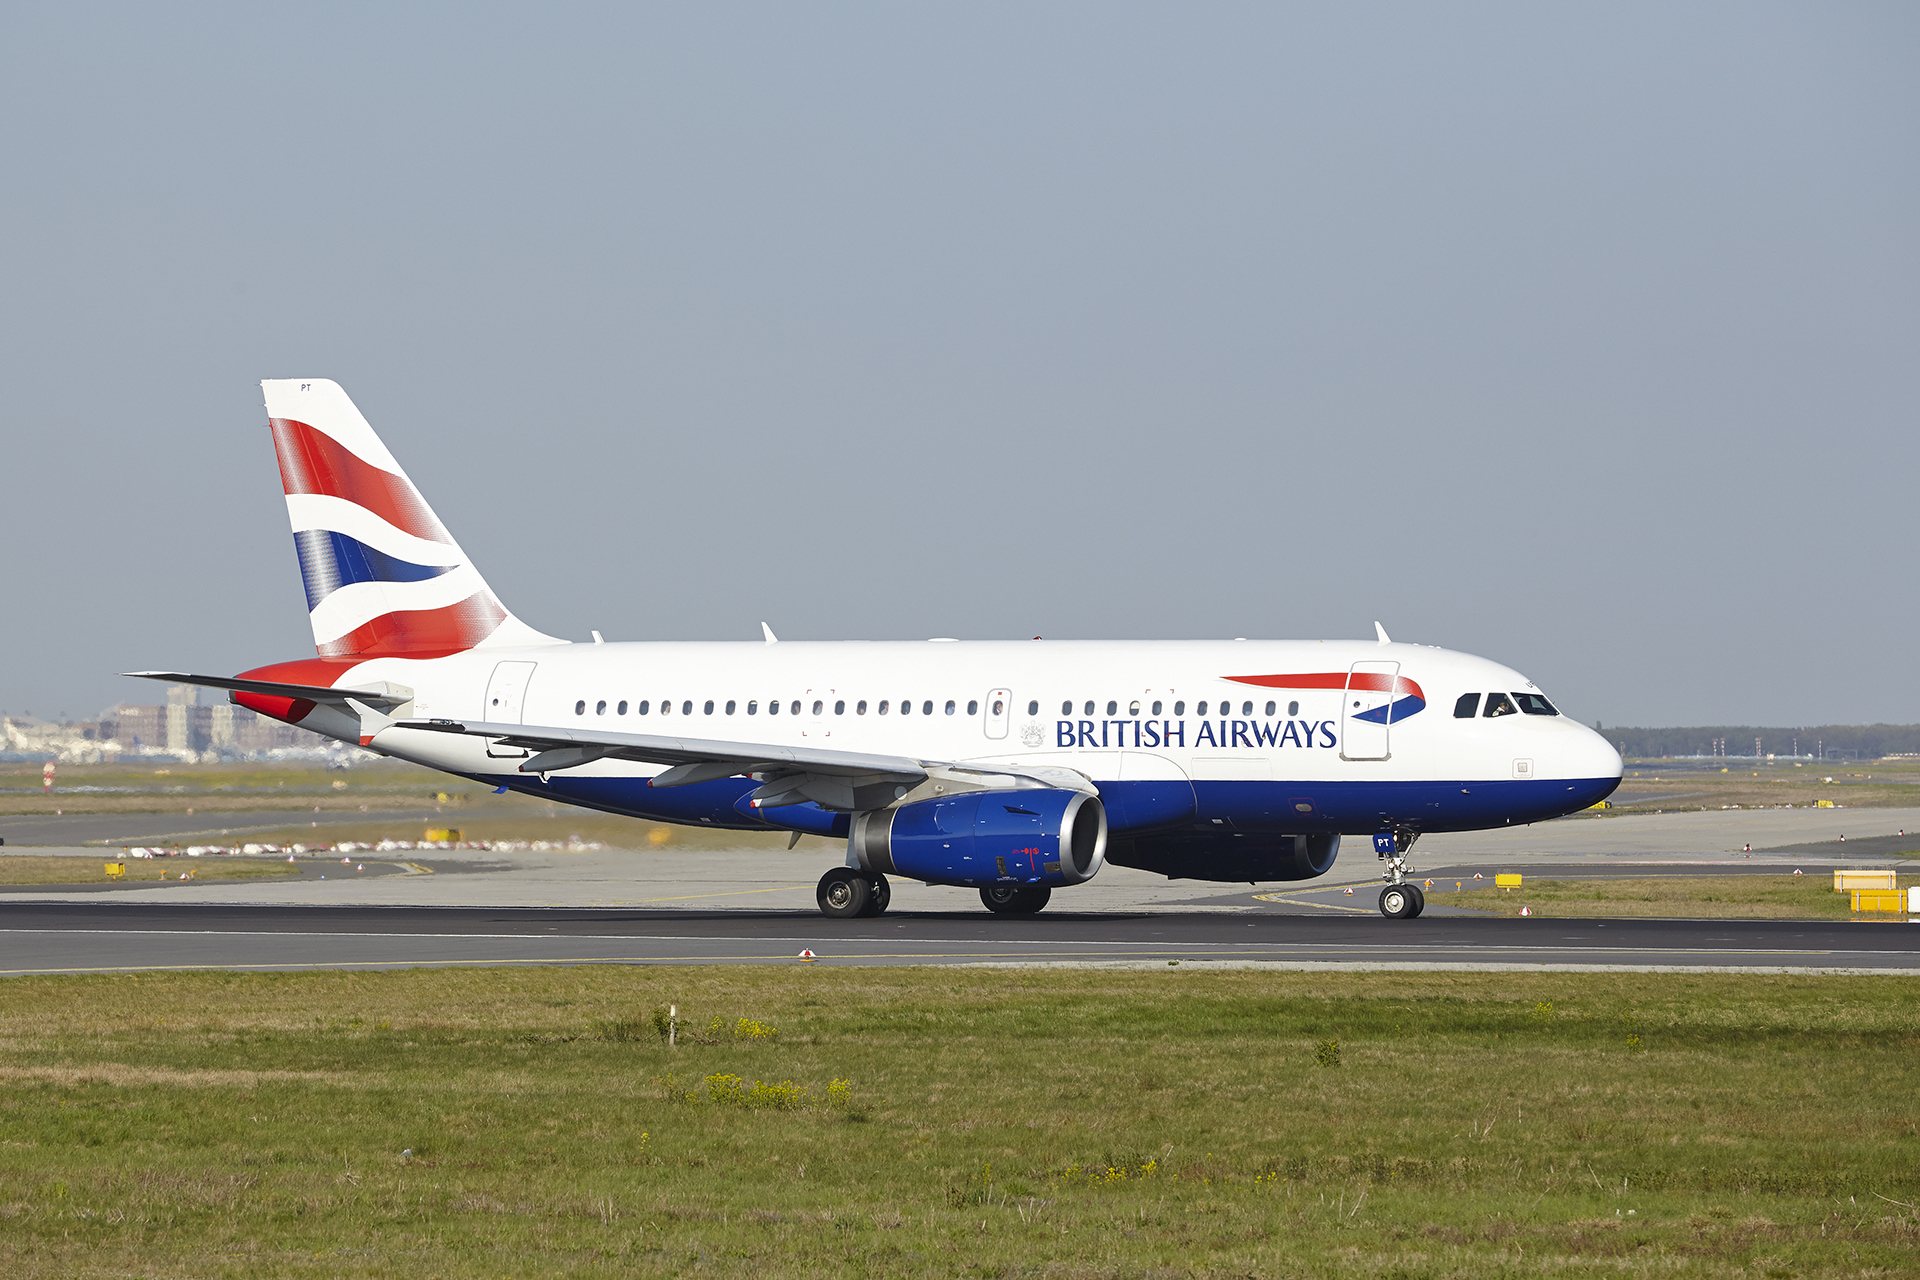 British Airways plane on the runway